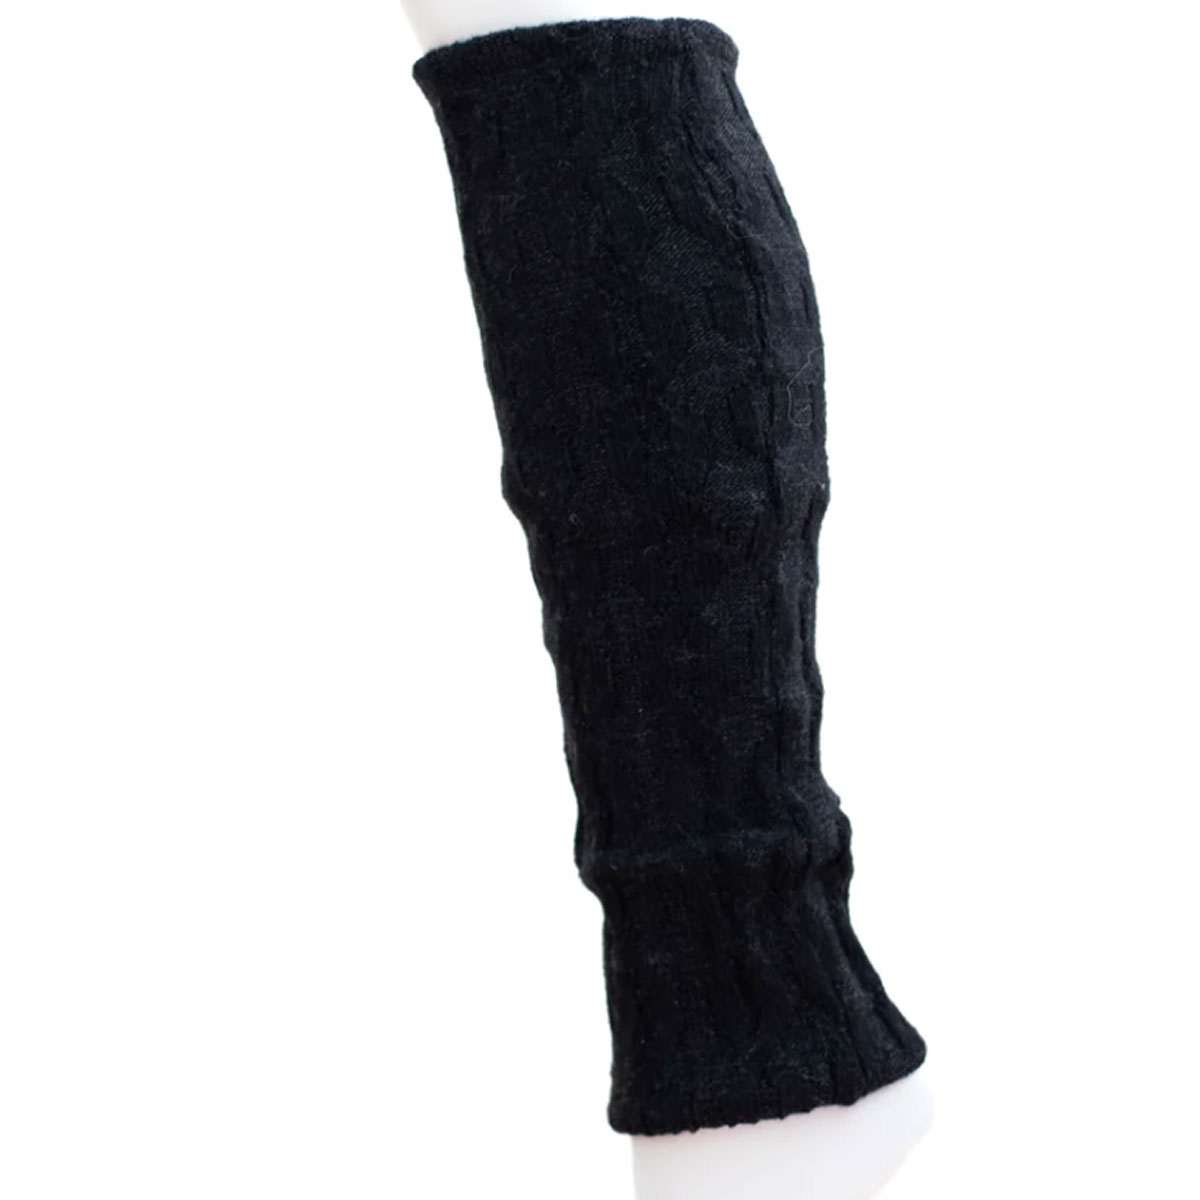 Weekday knitted leg warmers in black